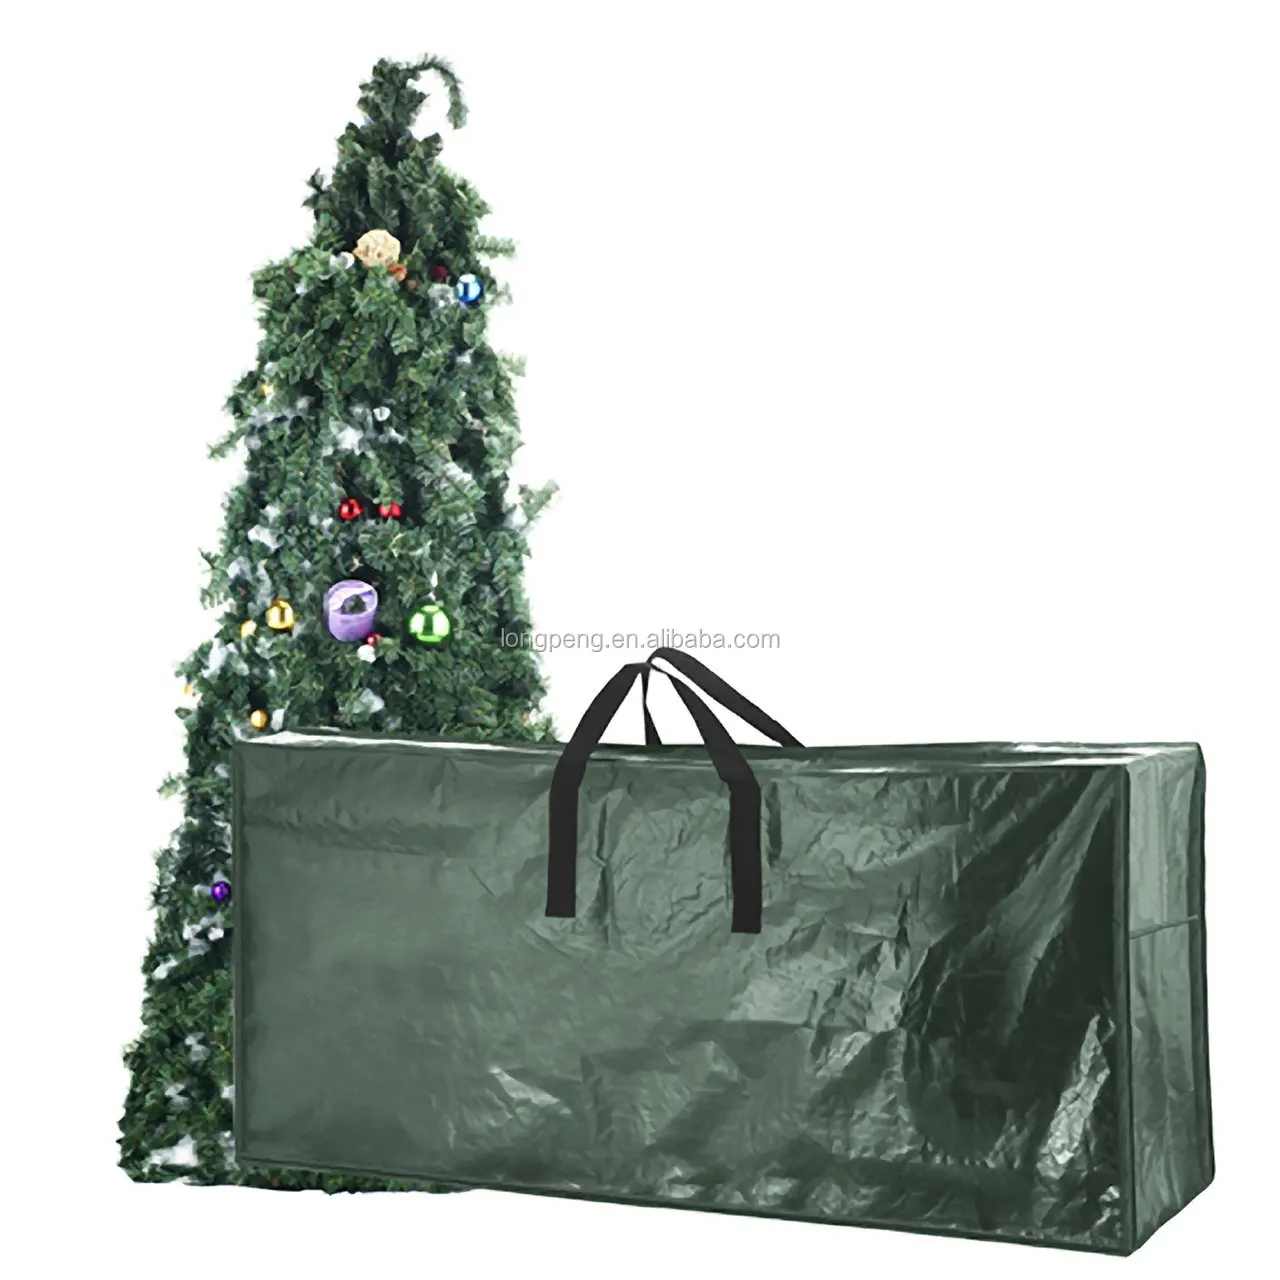 Tearproof クリスマスツリー収納袋休日ダークグリーンのために特大 9 フィート木 Buy クリスマスツリー ジッパーバッグ 格安ホリデーギフトバッグ クリスマスリース収納袋 Product On Alibaba Com